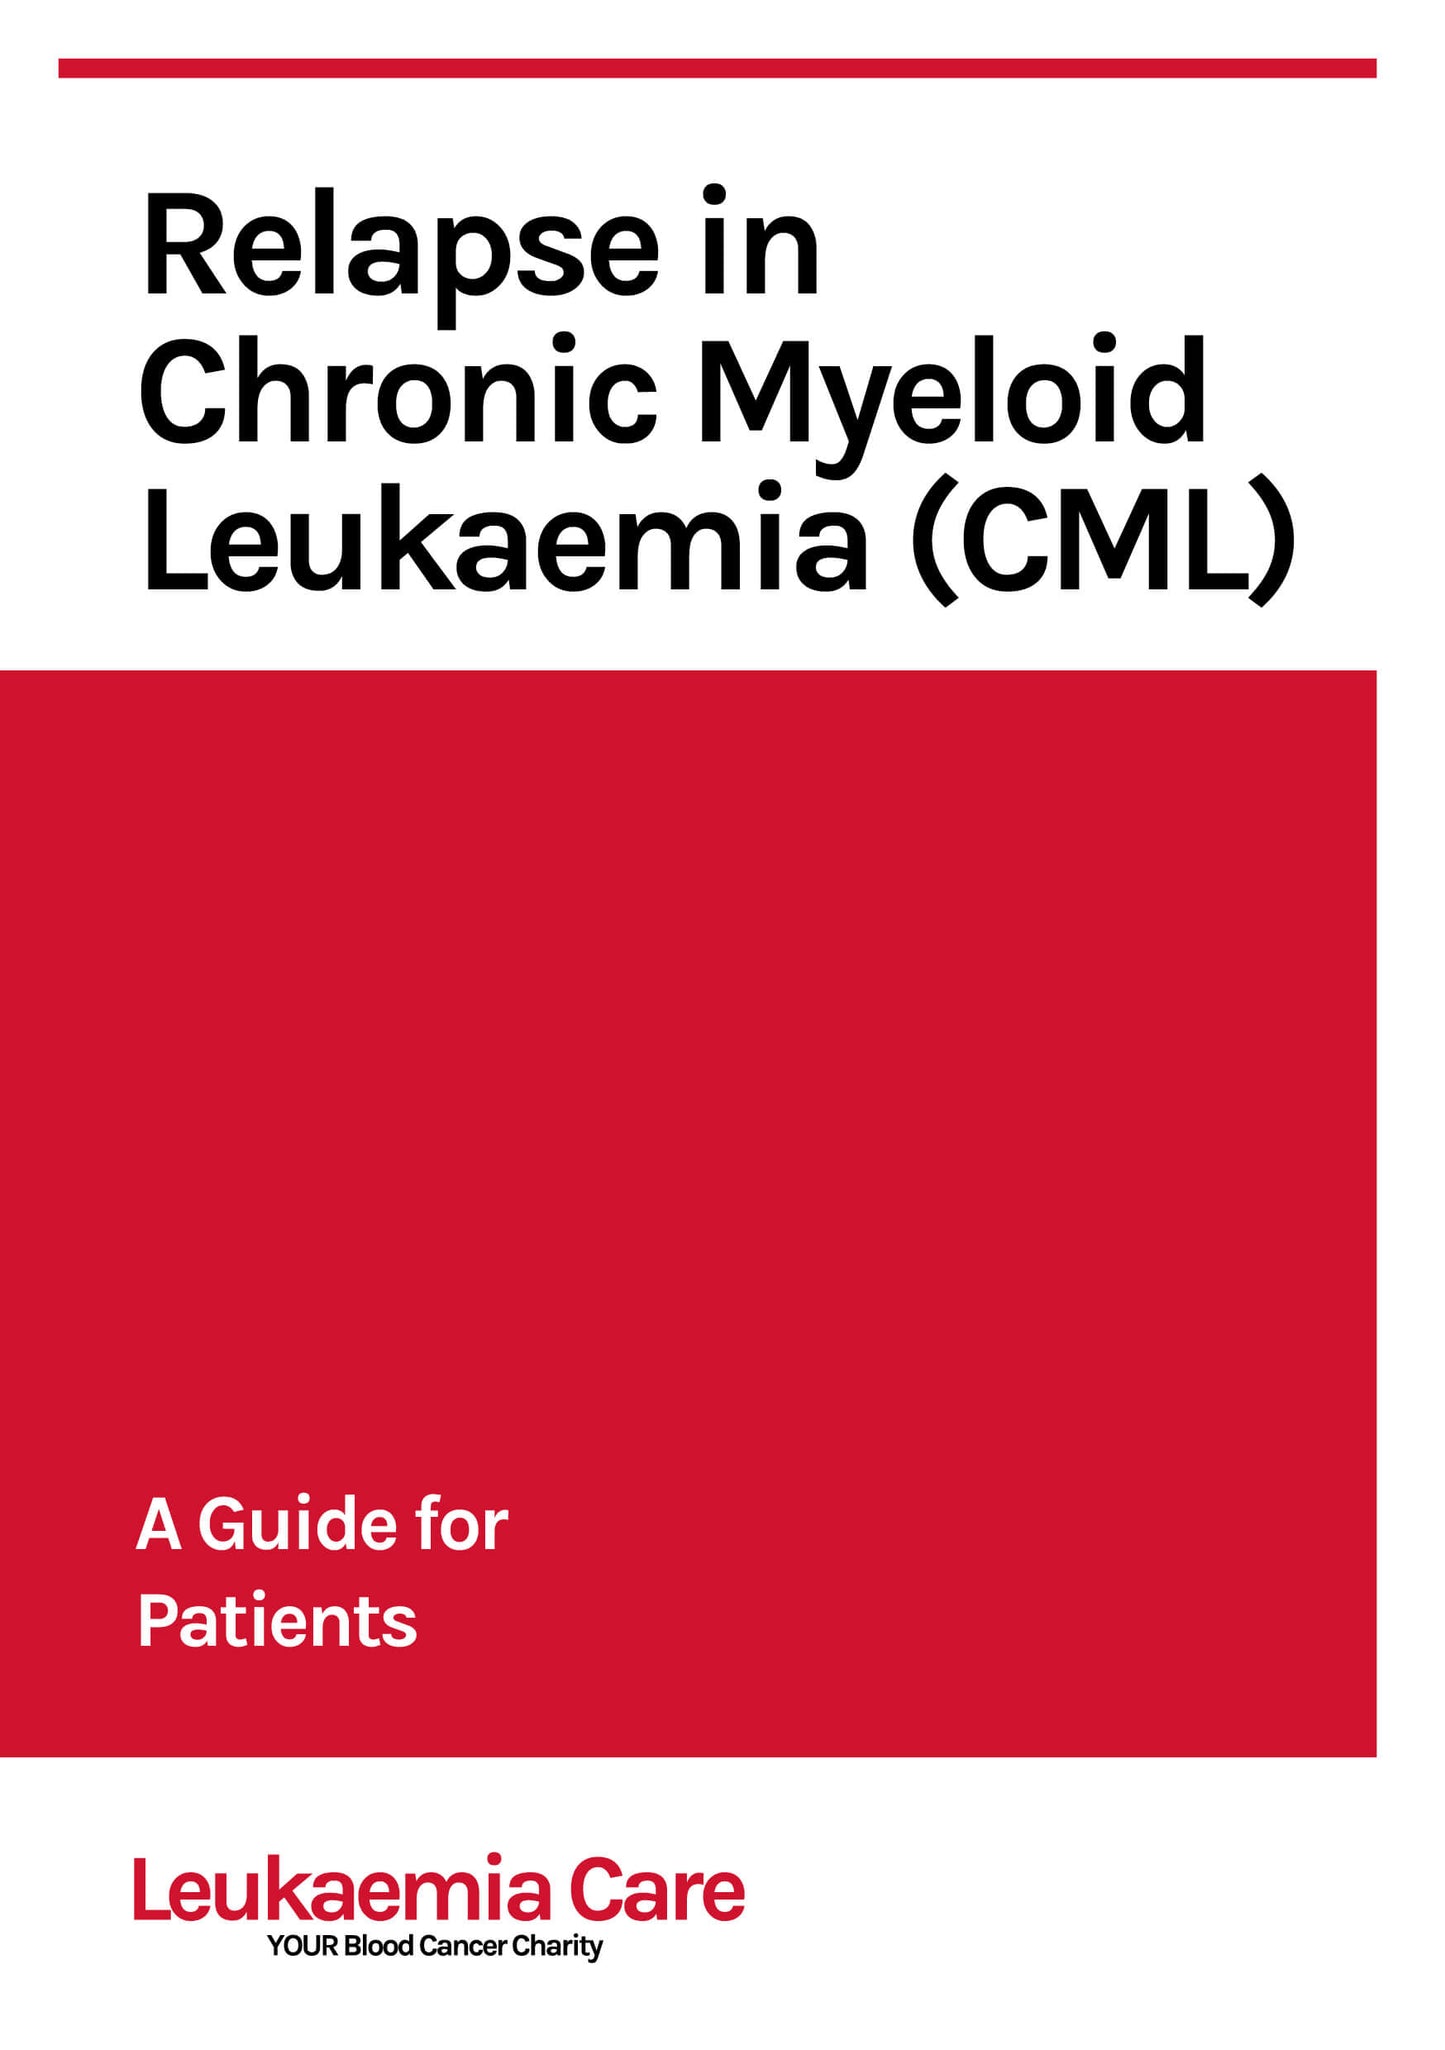 Relapse in Chronic Myeloid Leukaemia (CML)